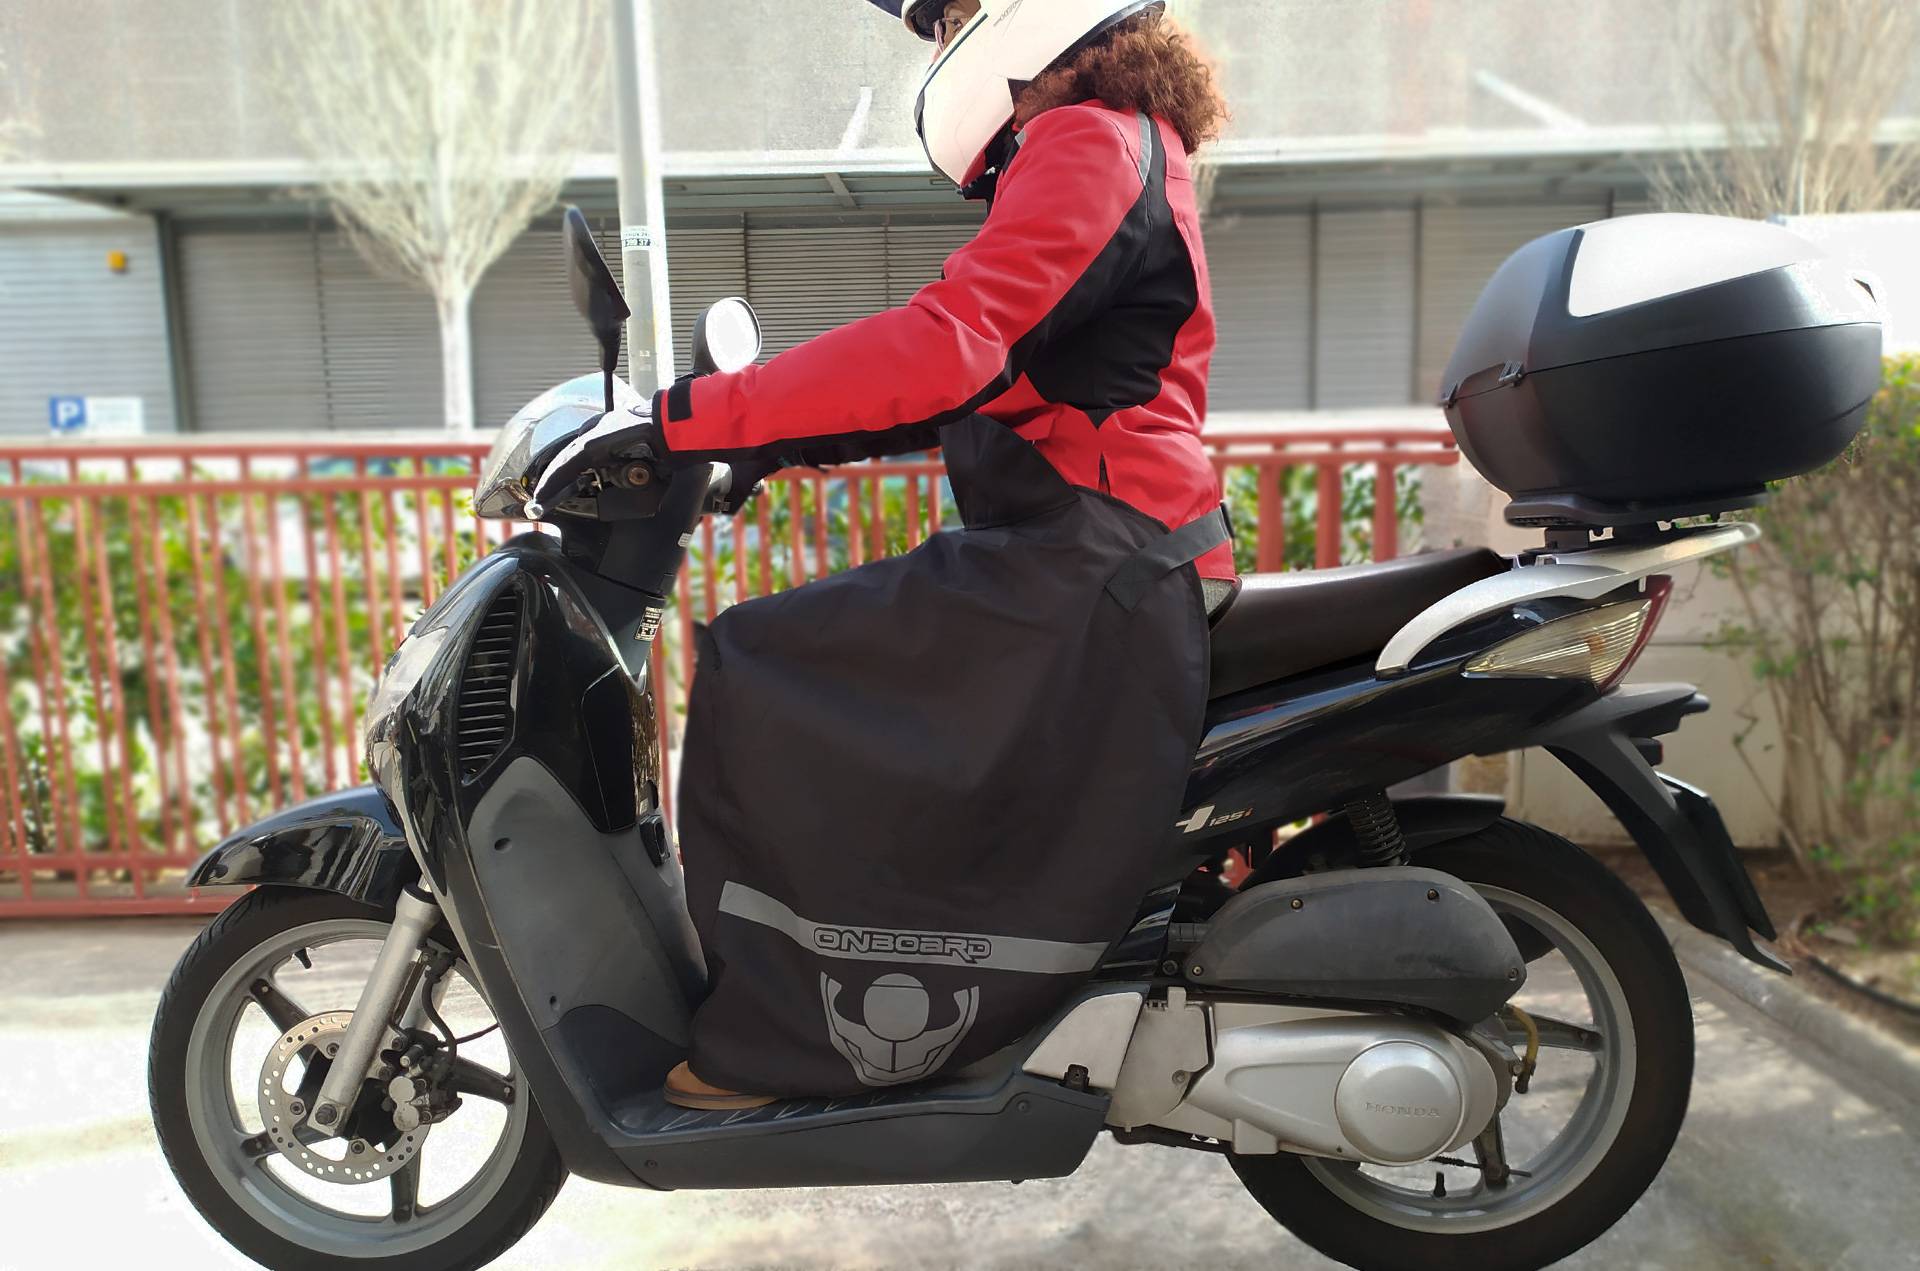 Comprar chaqueta moto mujer ON BOARD Angie roja